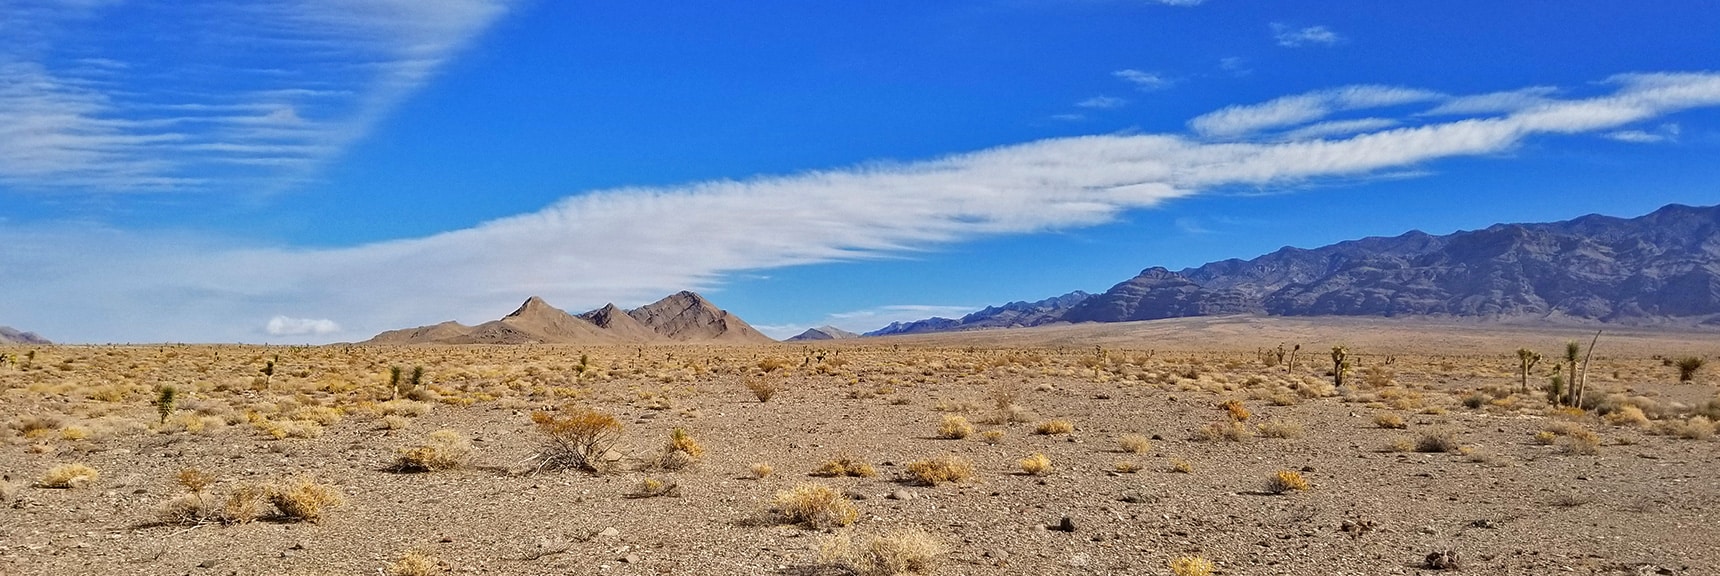 Rounding the North Edge of the Sheep Range on Alamo Road | Lower Alamo Road | Sheep Range | Desert National Wildlife Refuge, Nevada